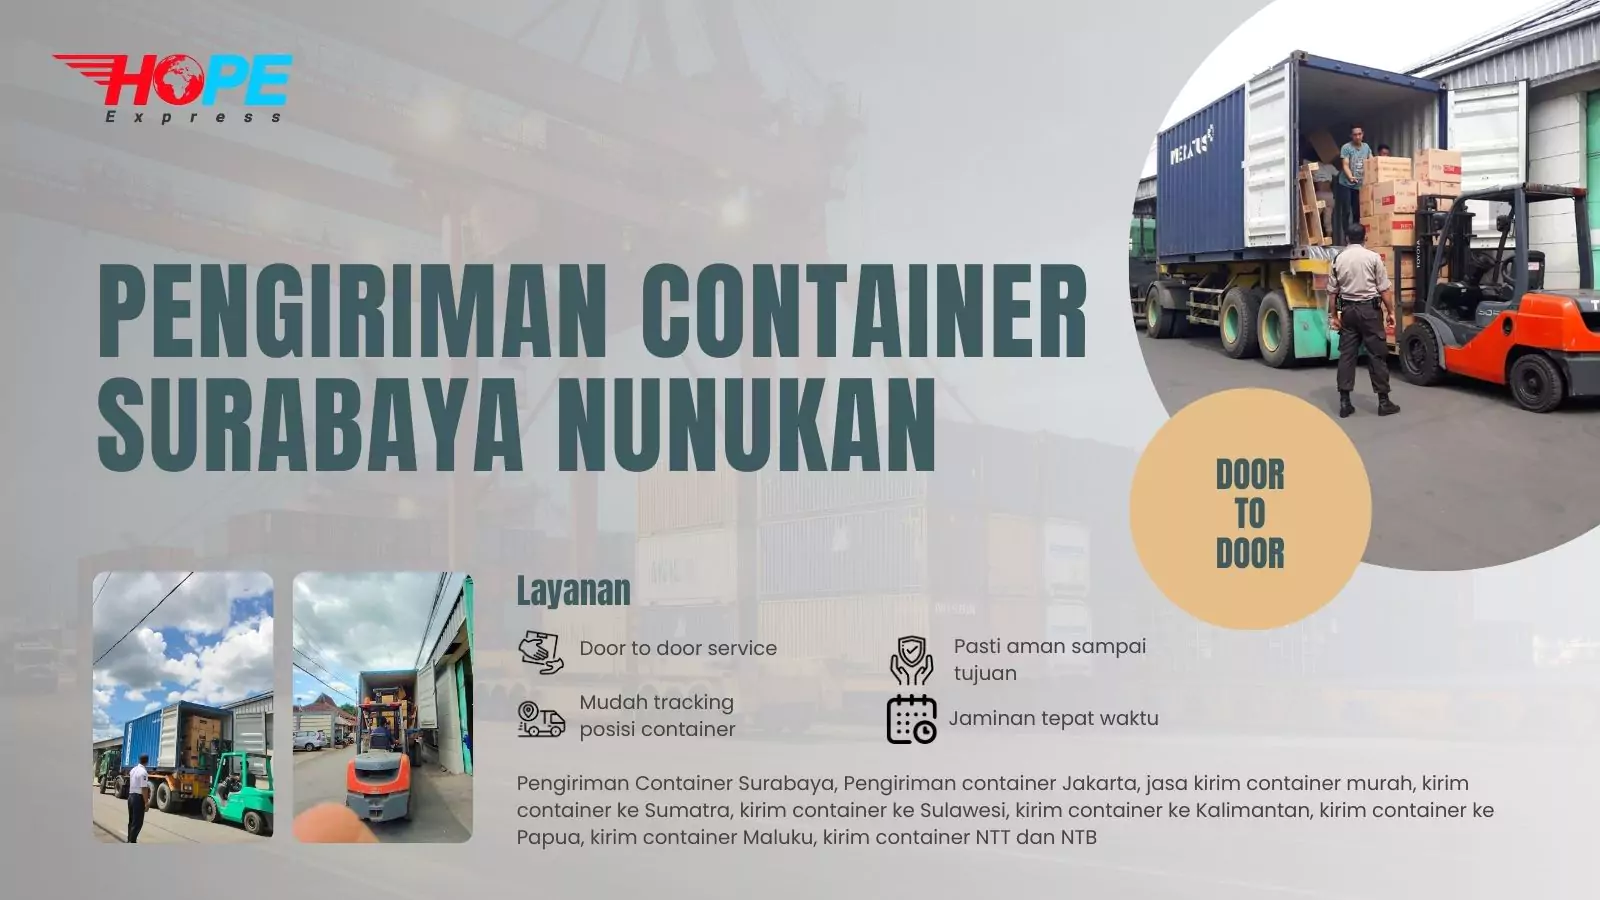 Pengiriman Container Surabaya Nunukan